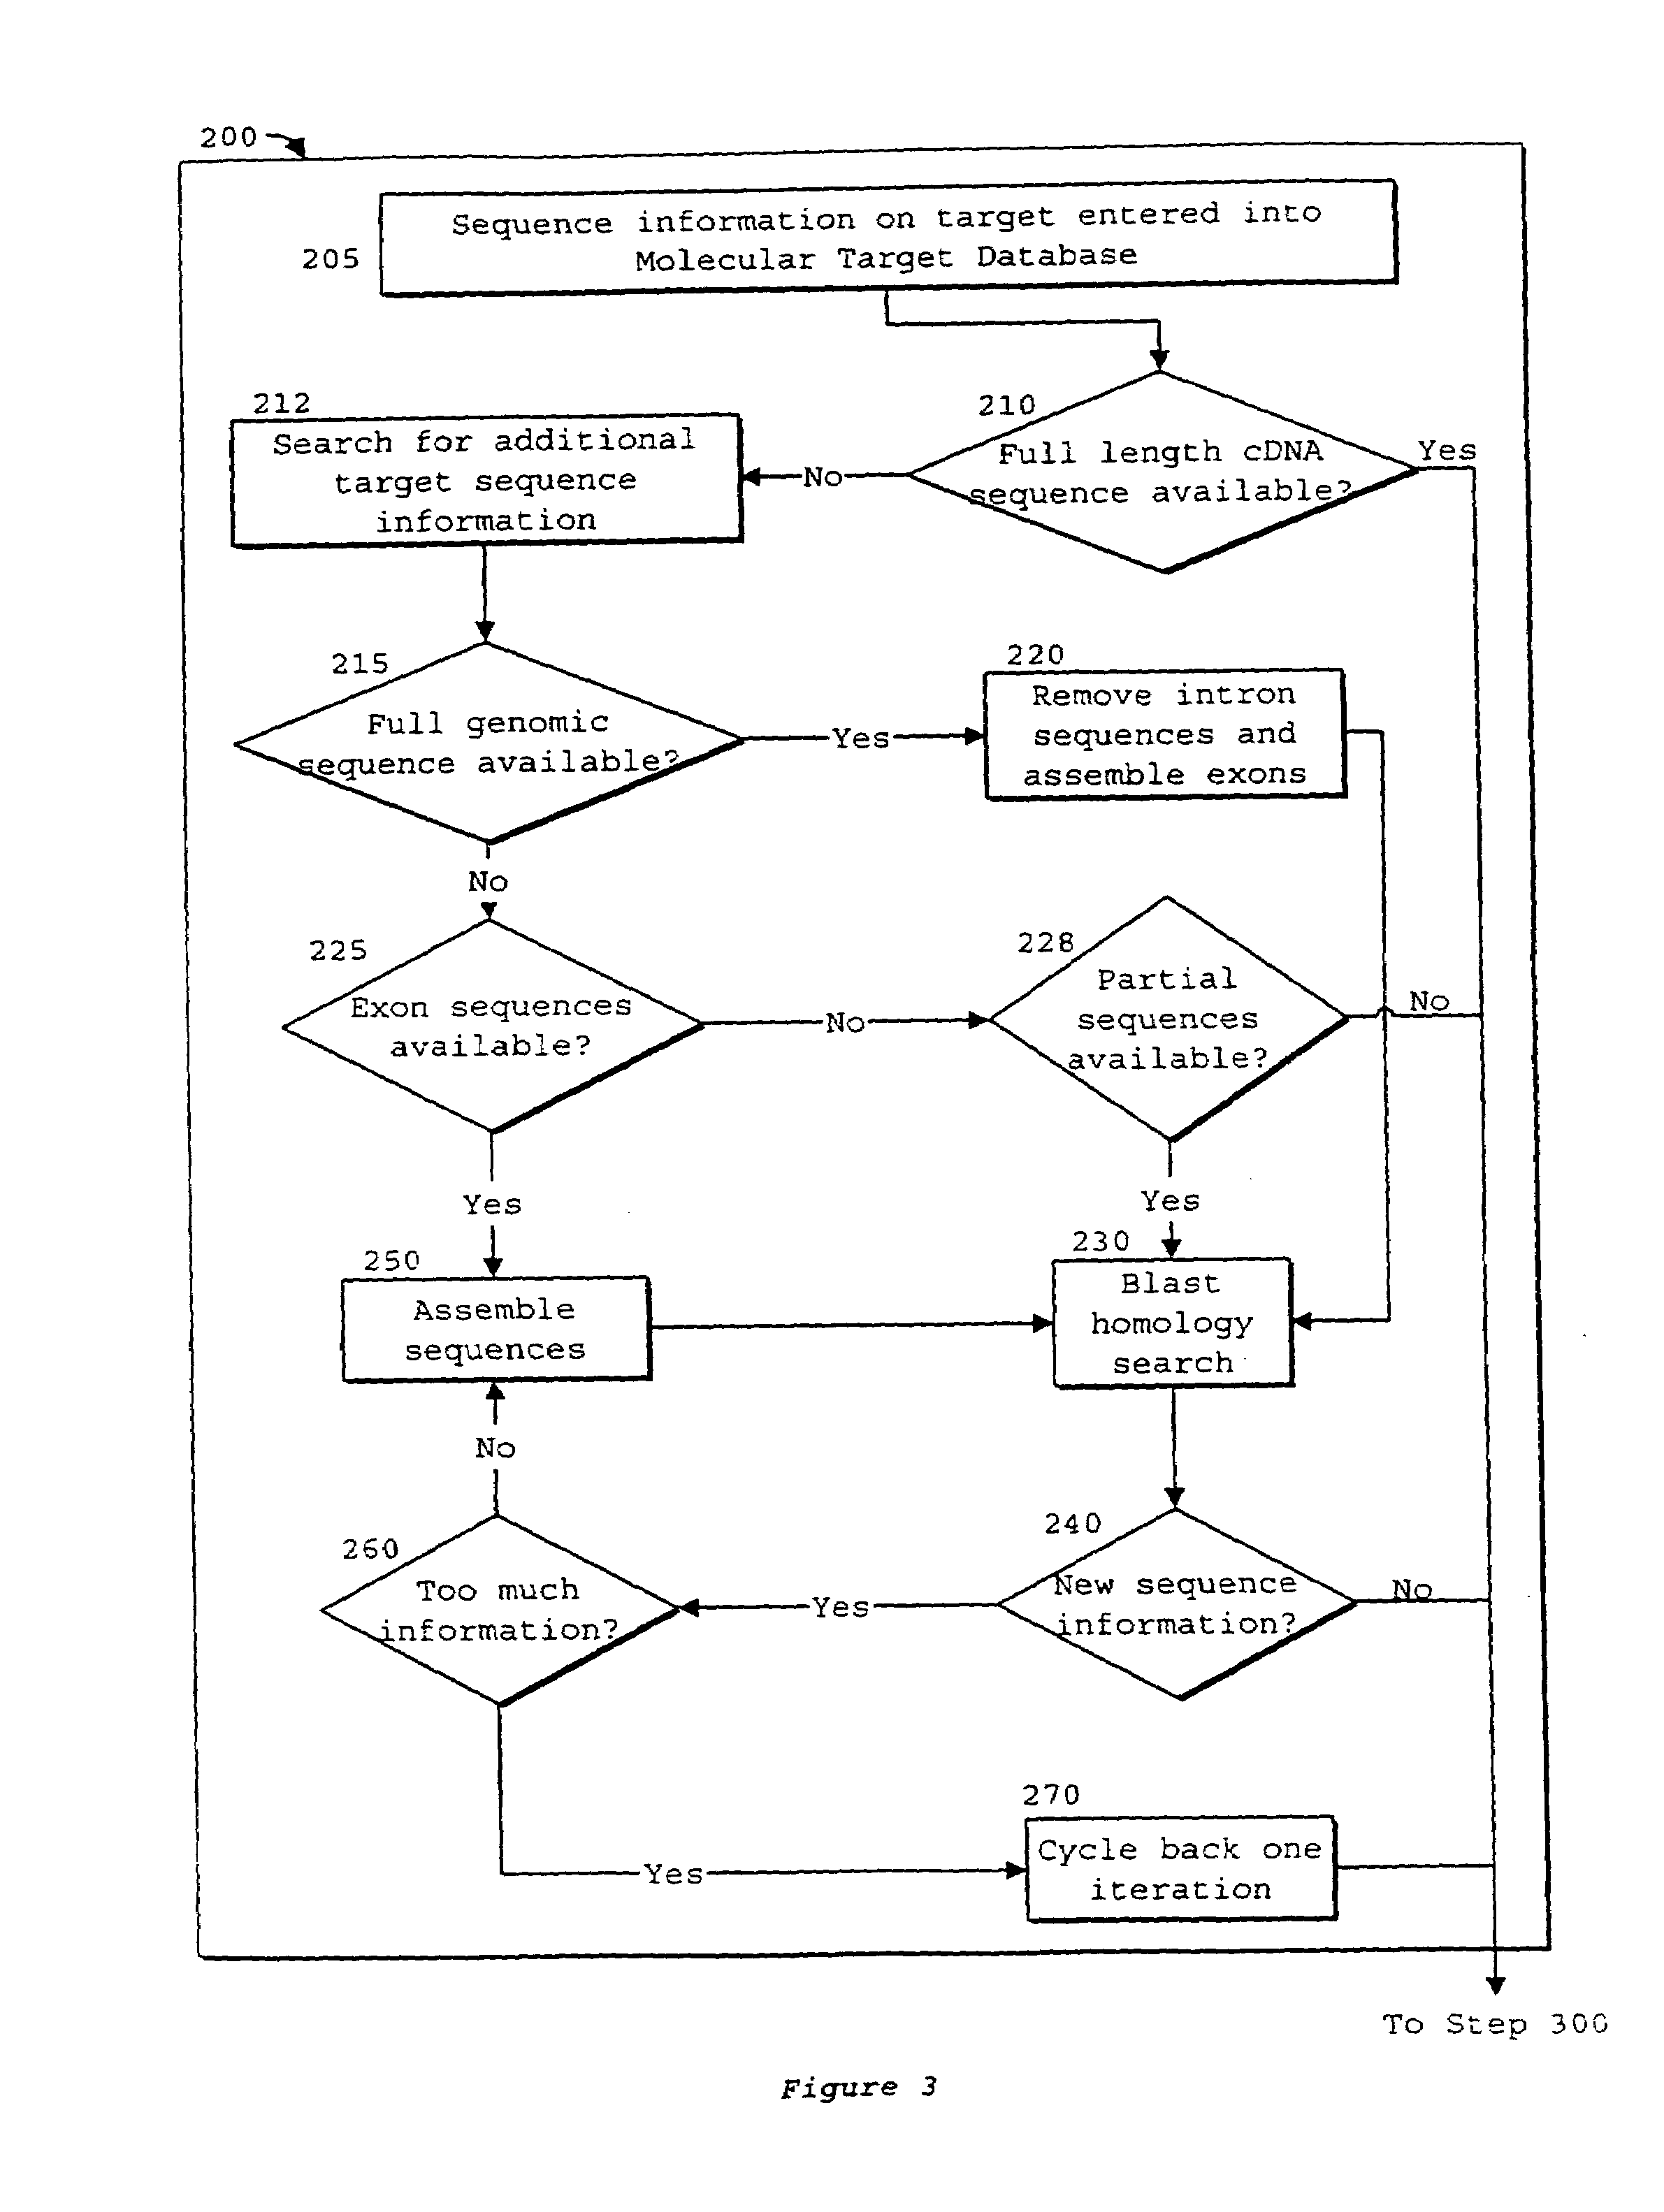 System of components for preparing oligonucleotides